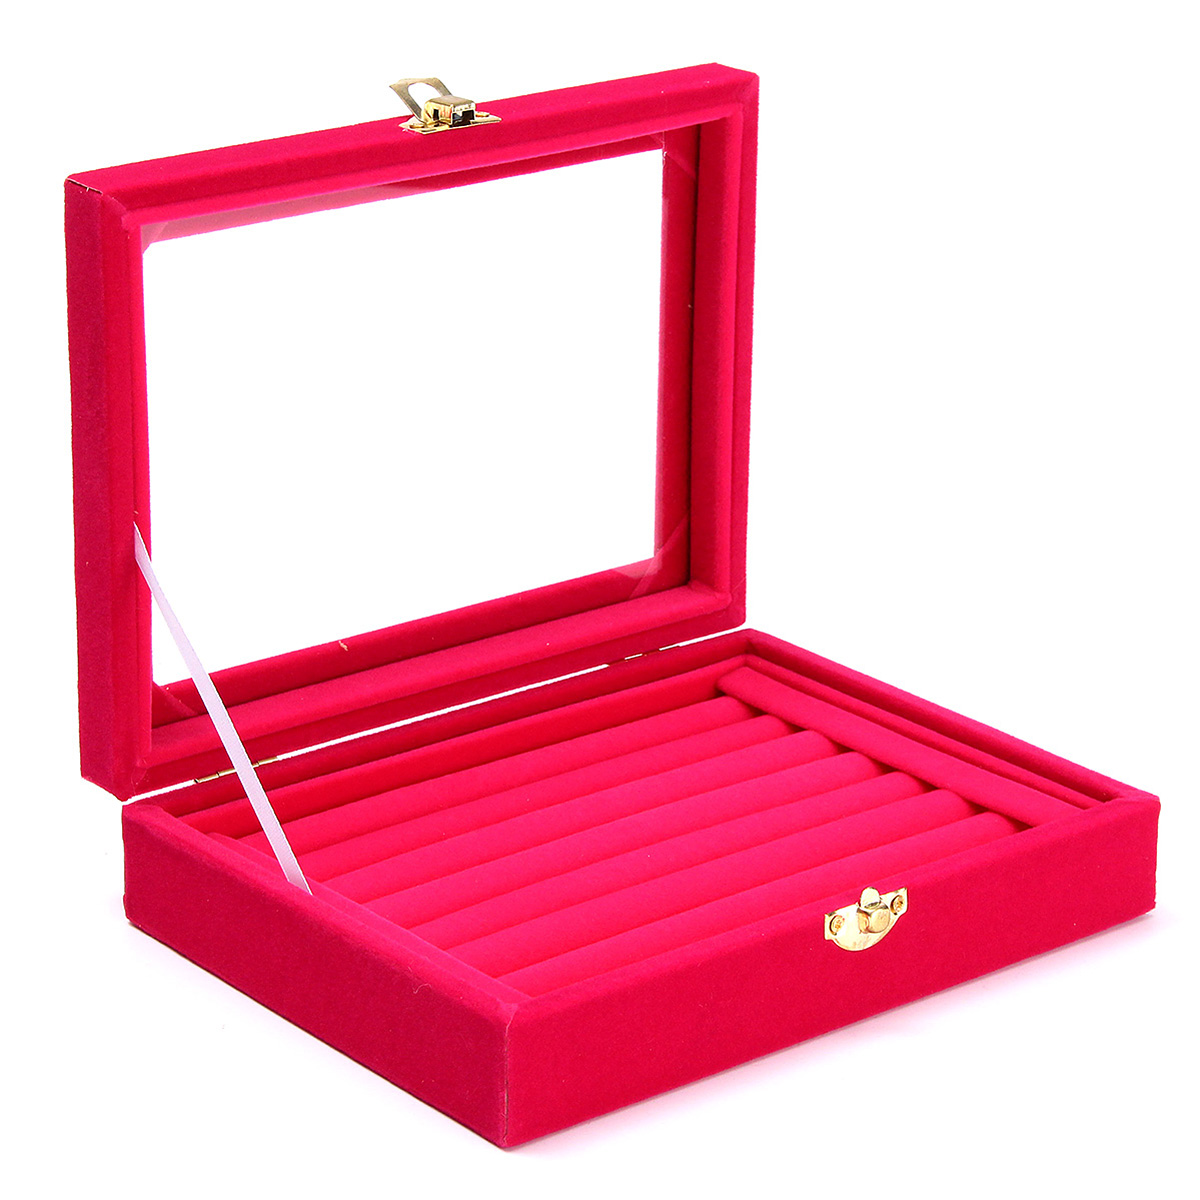 Jewelry-Velvet-Wood-Ring-Display-Organizer-Case-Tray-Holder-Earring-Storage-Box-1221119-7